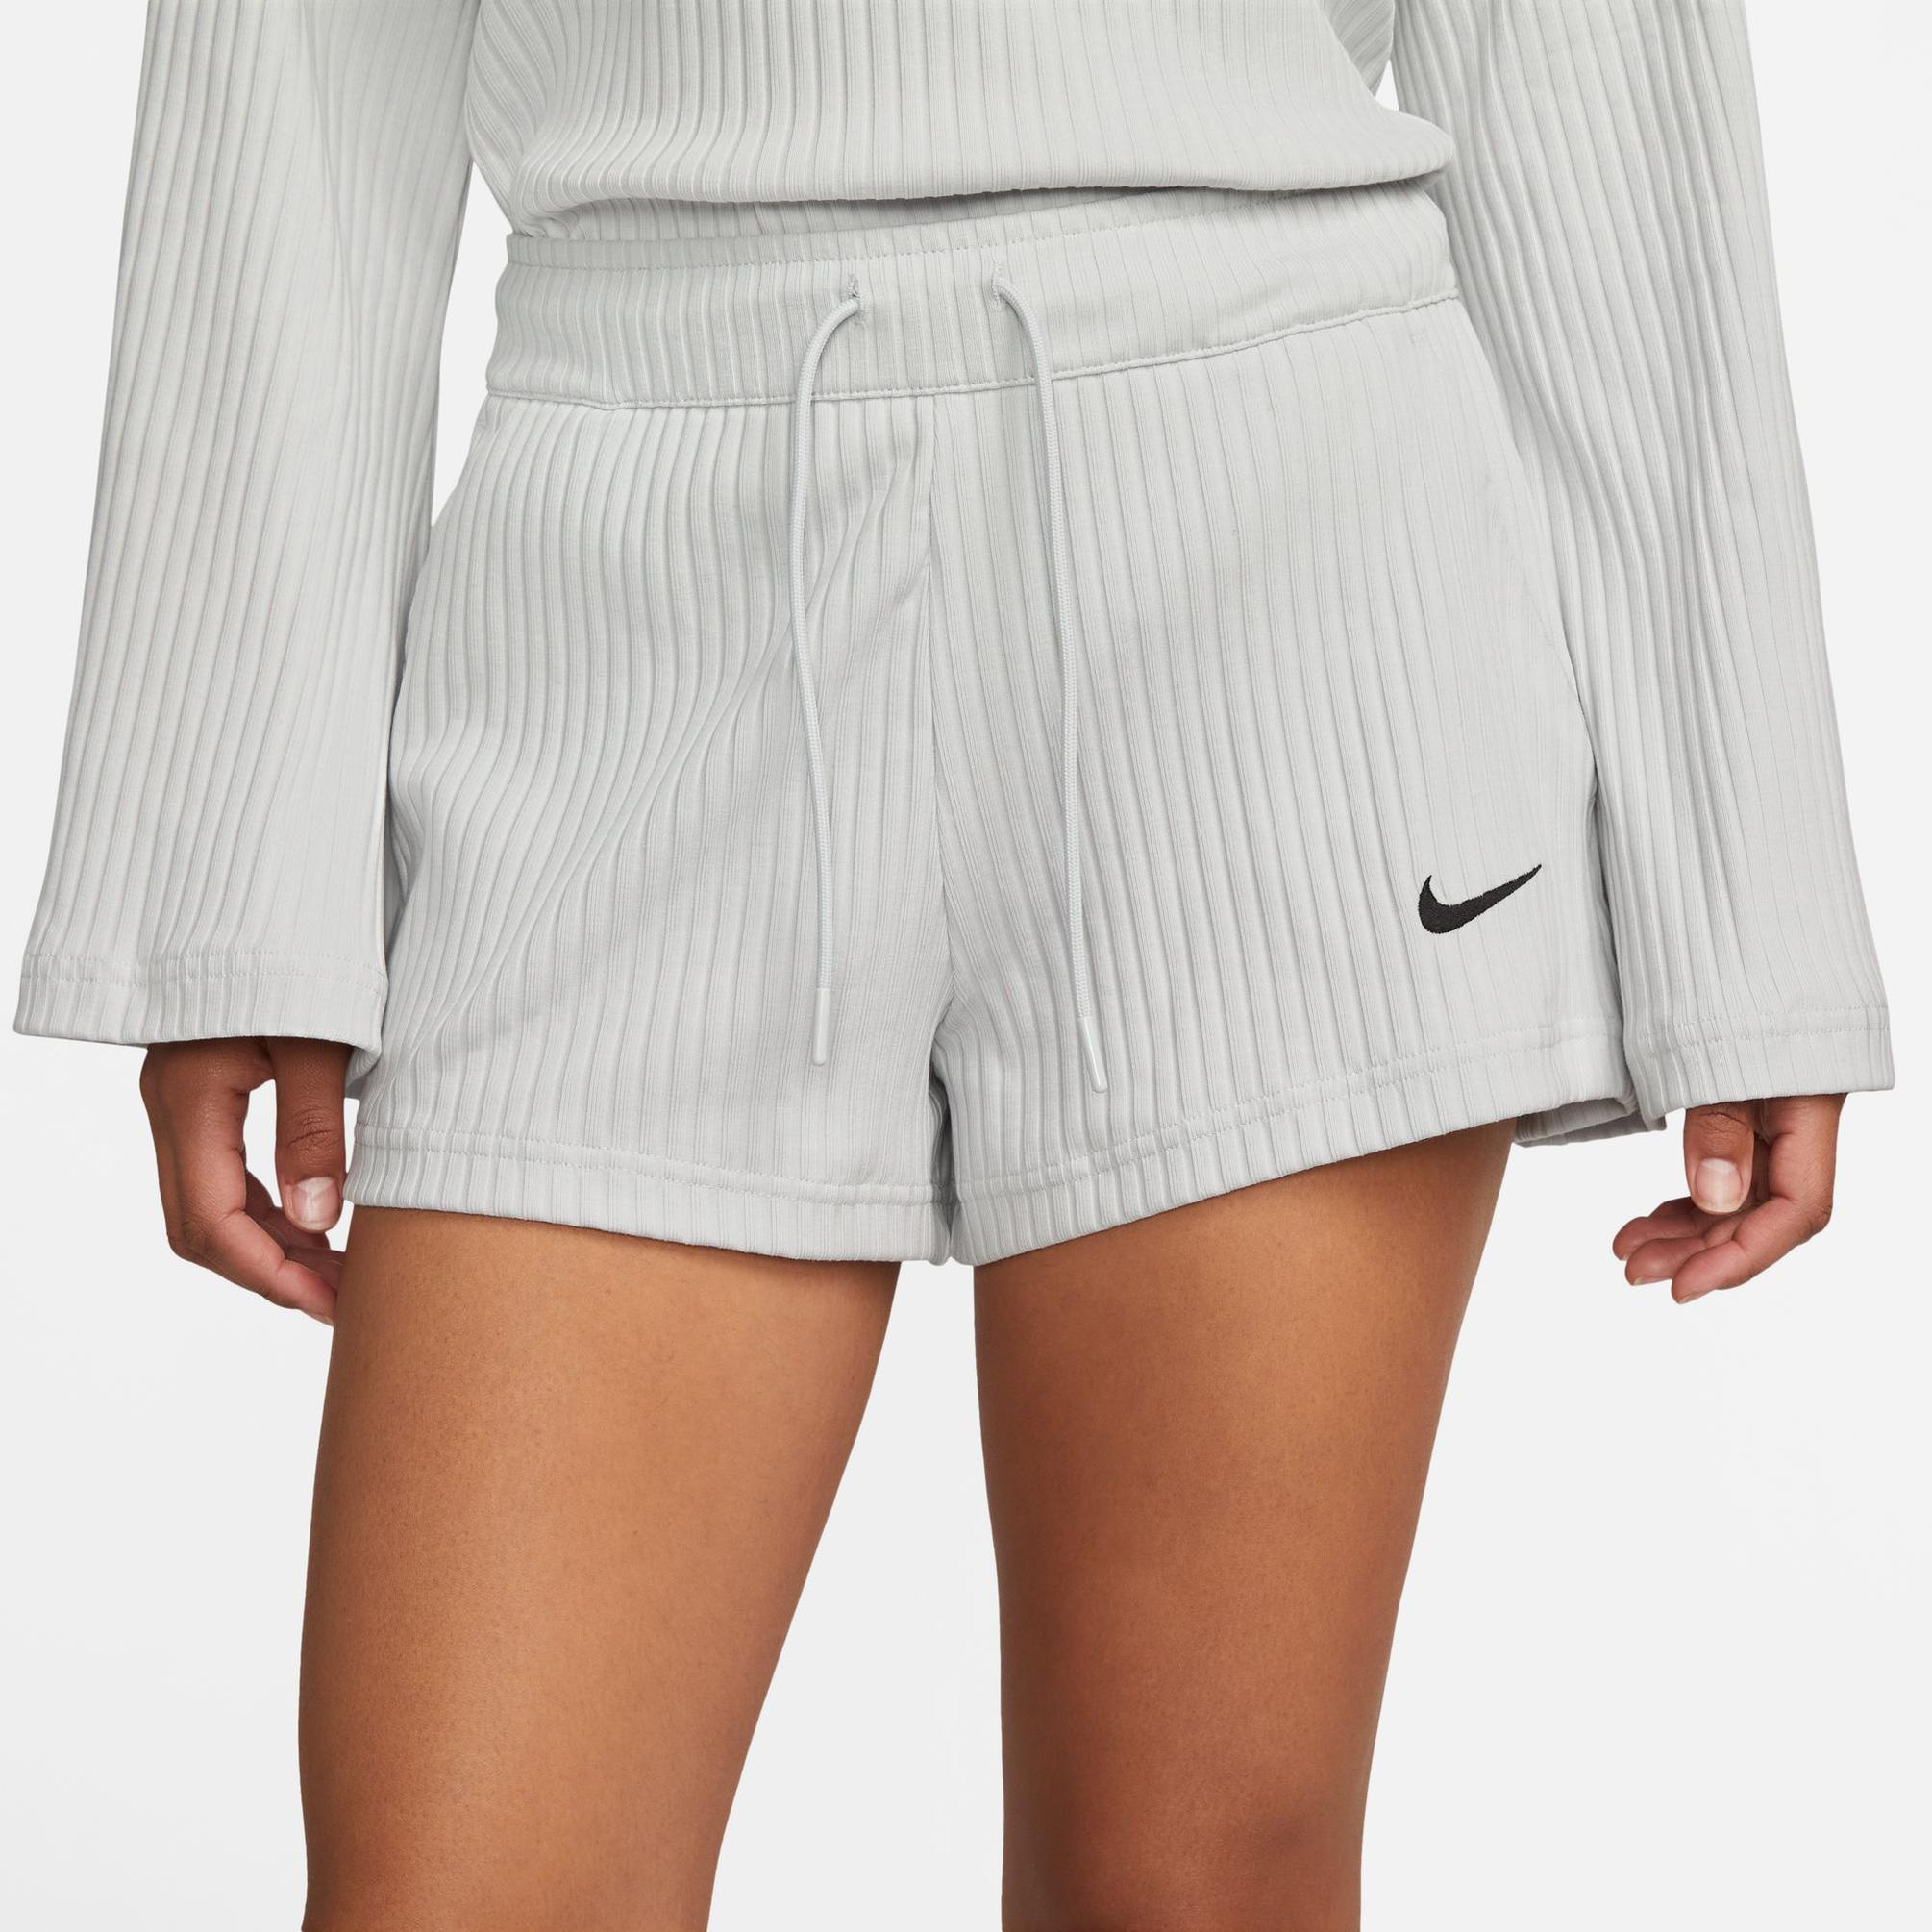  Nike Sportswear Rib Jersey Kadın Gri Şort